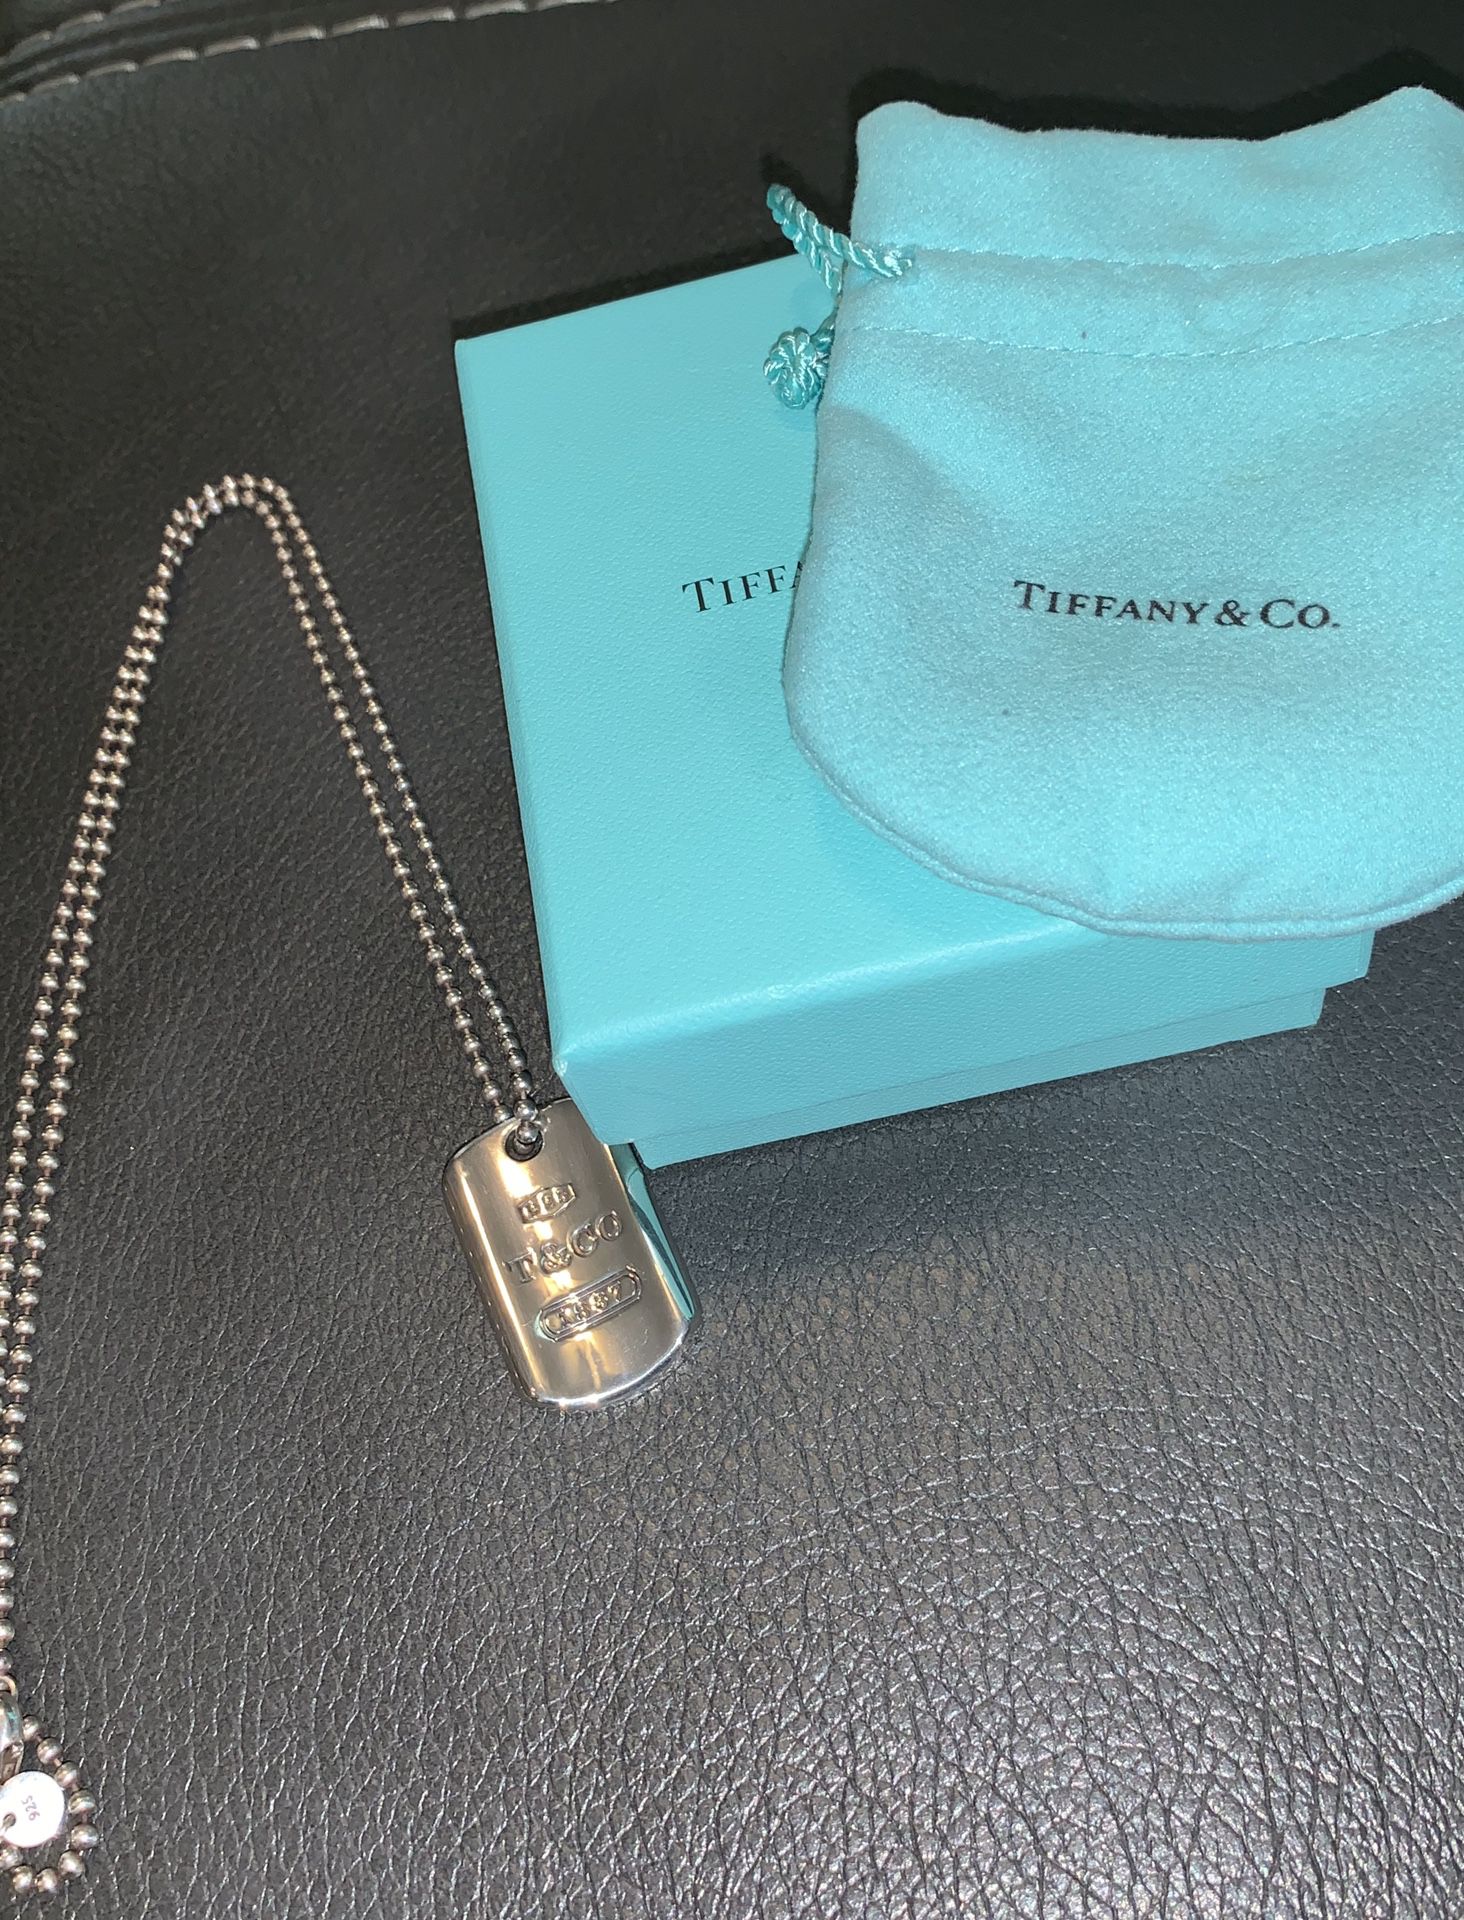 Tiffany & Co. Pendant necklace